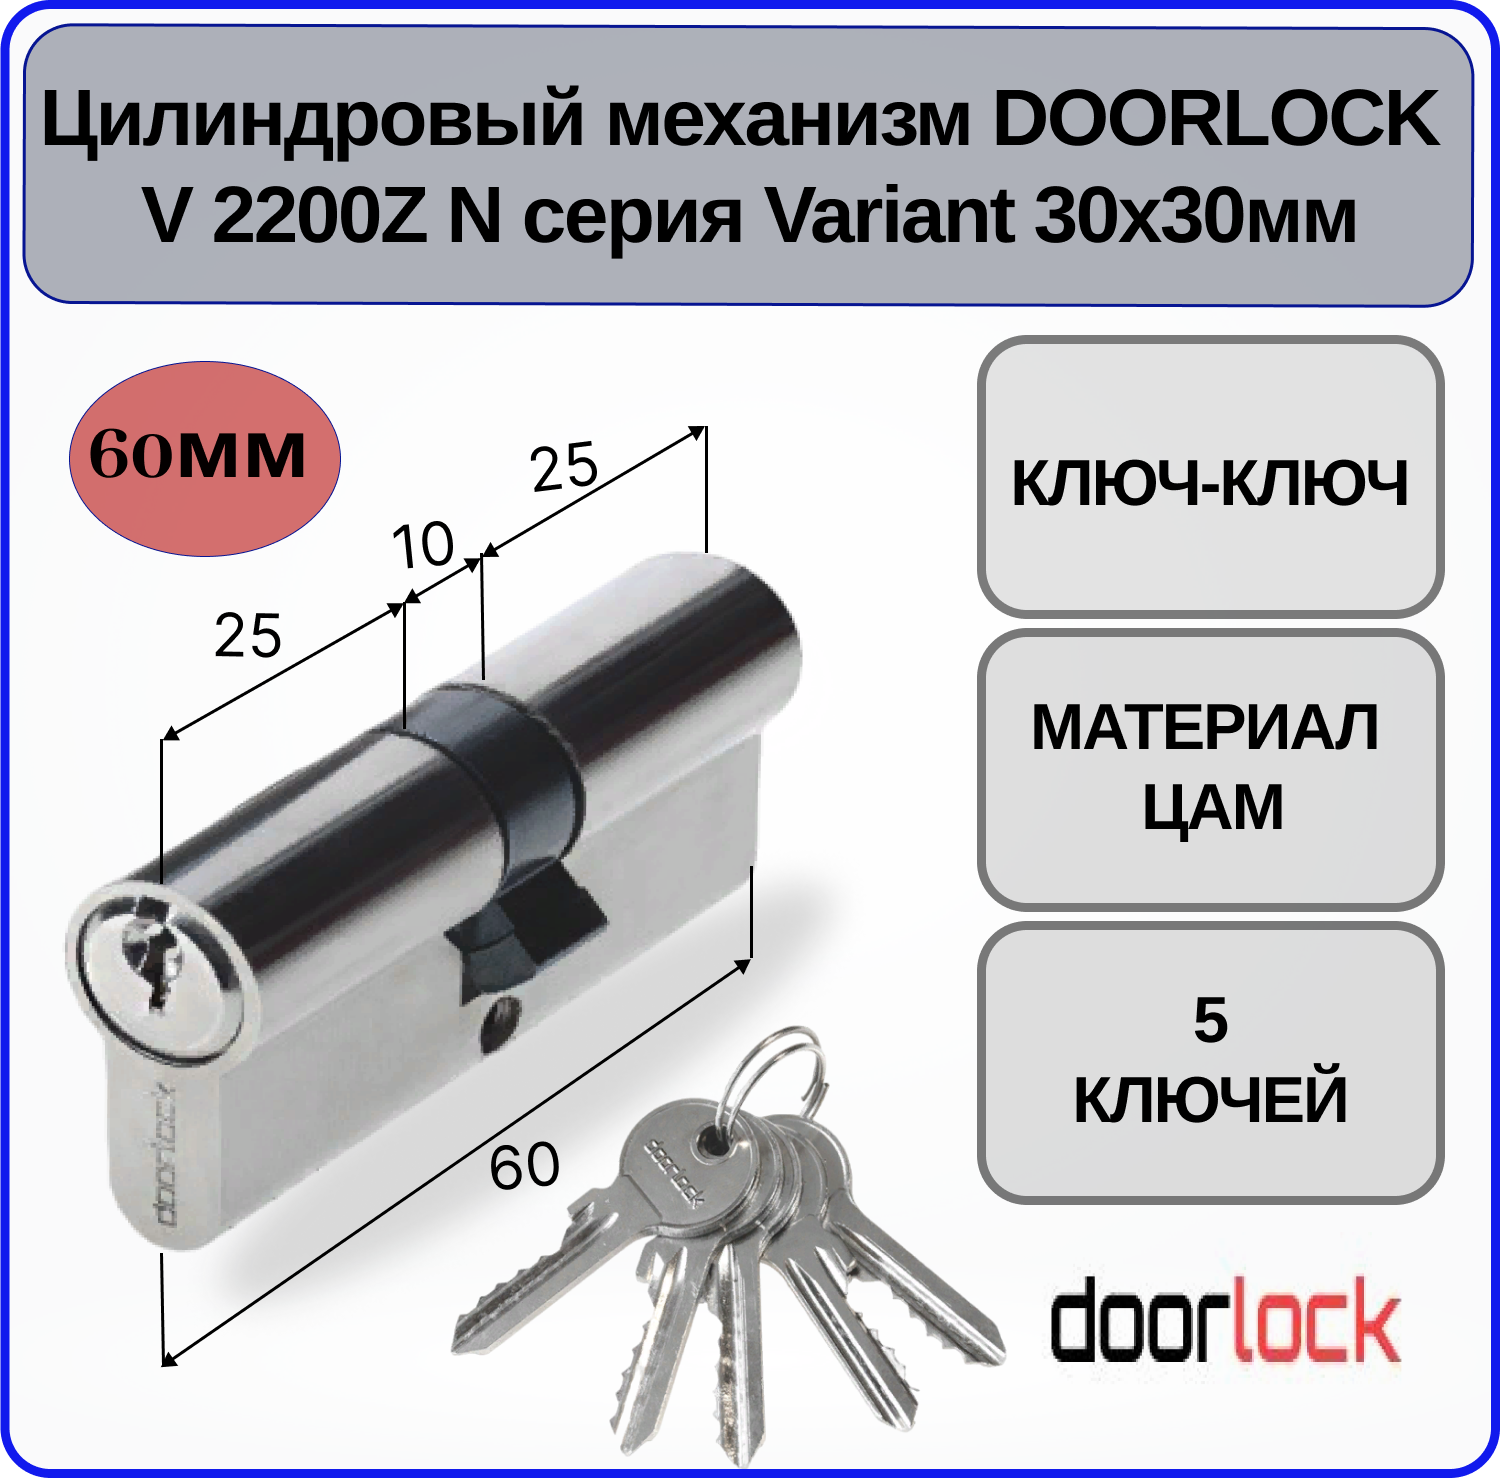 Цилиндровый механизм 60 мм Doorlock V 2200Z N Variant 30x30мм ключ-ключ 5 ключей личинка для замка